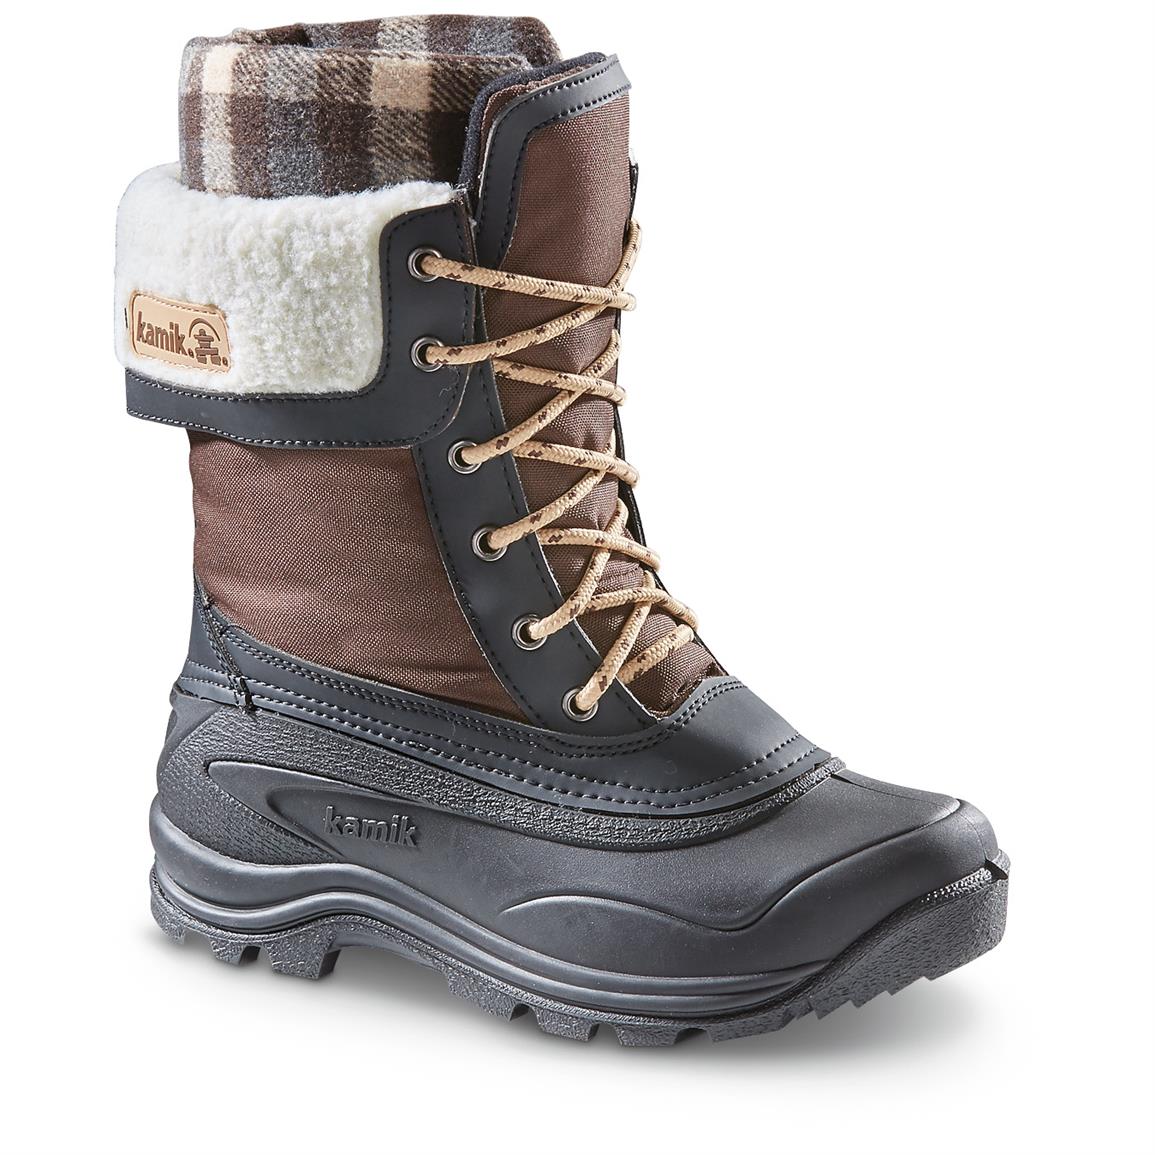 *NEW* UGG Adirondack III Waterproof Women's Snow Boots